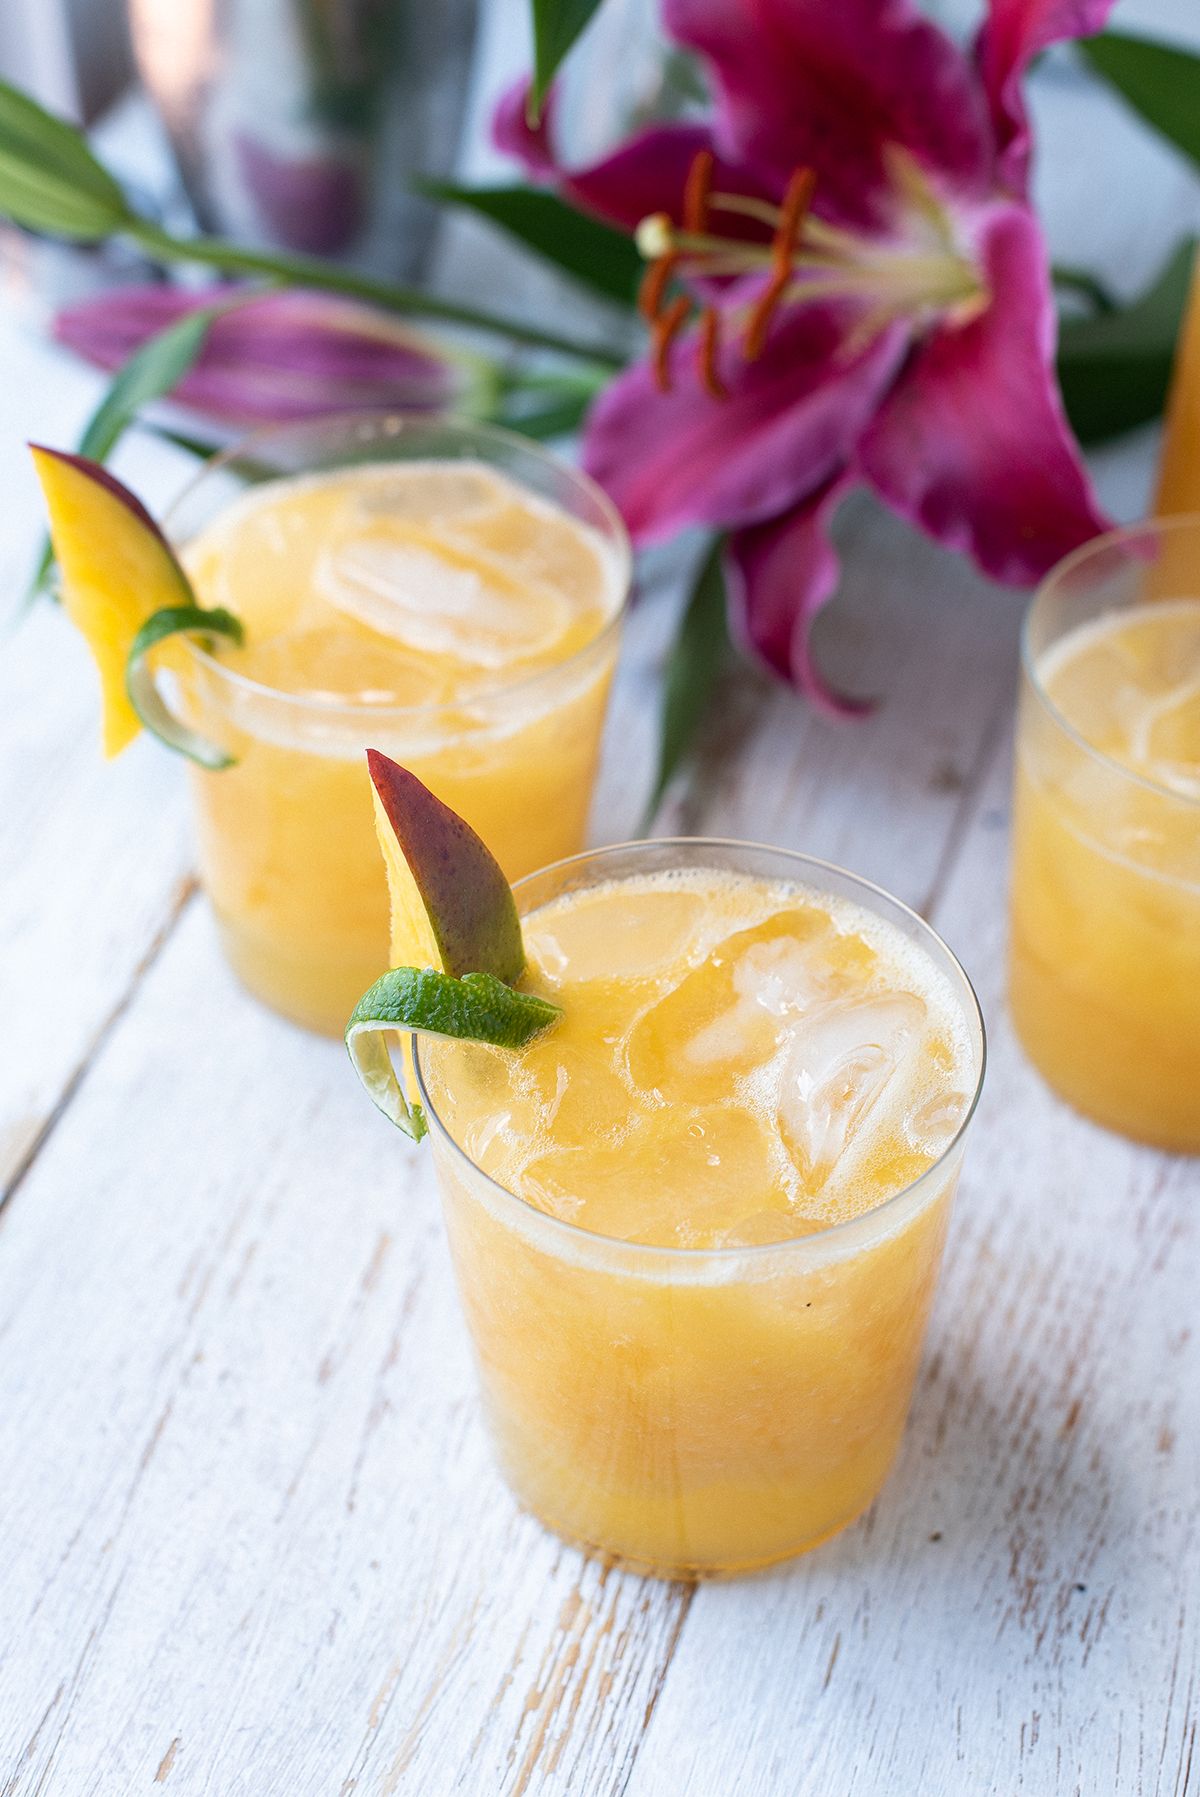 Tropical Mango Cocktail